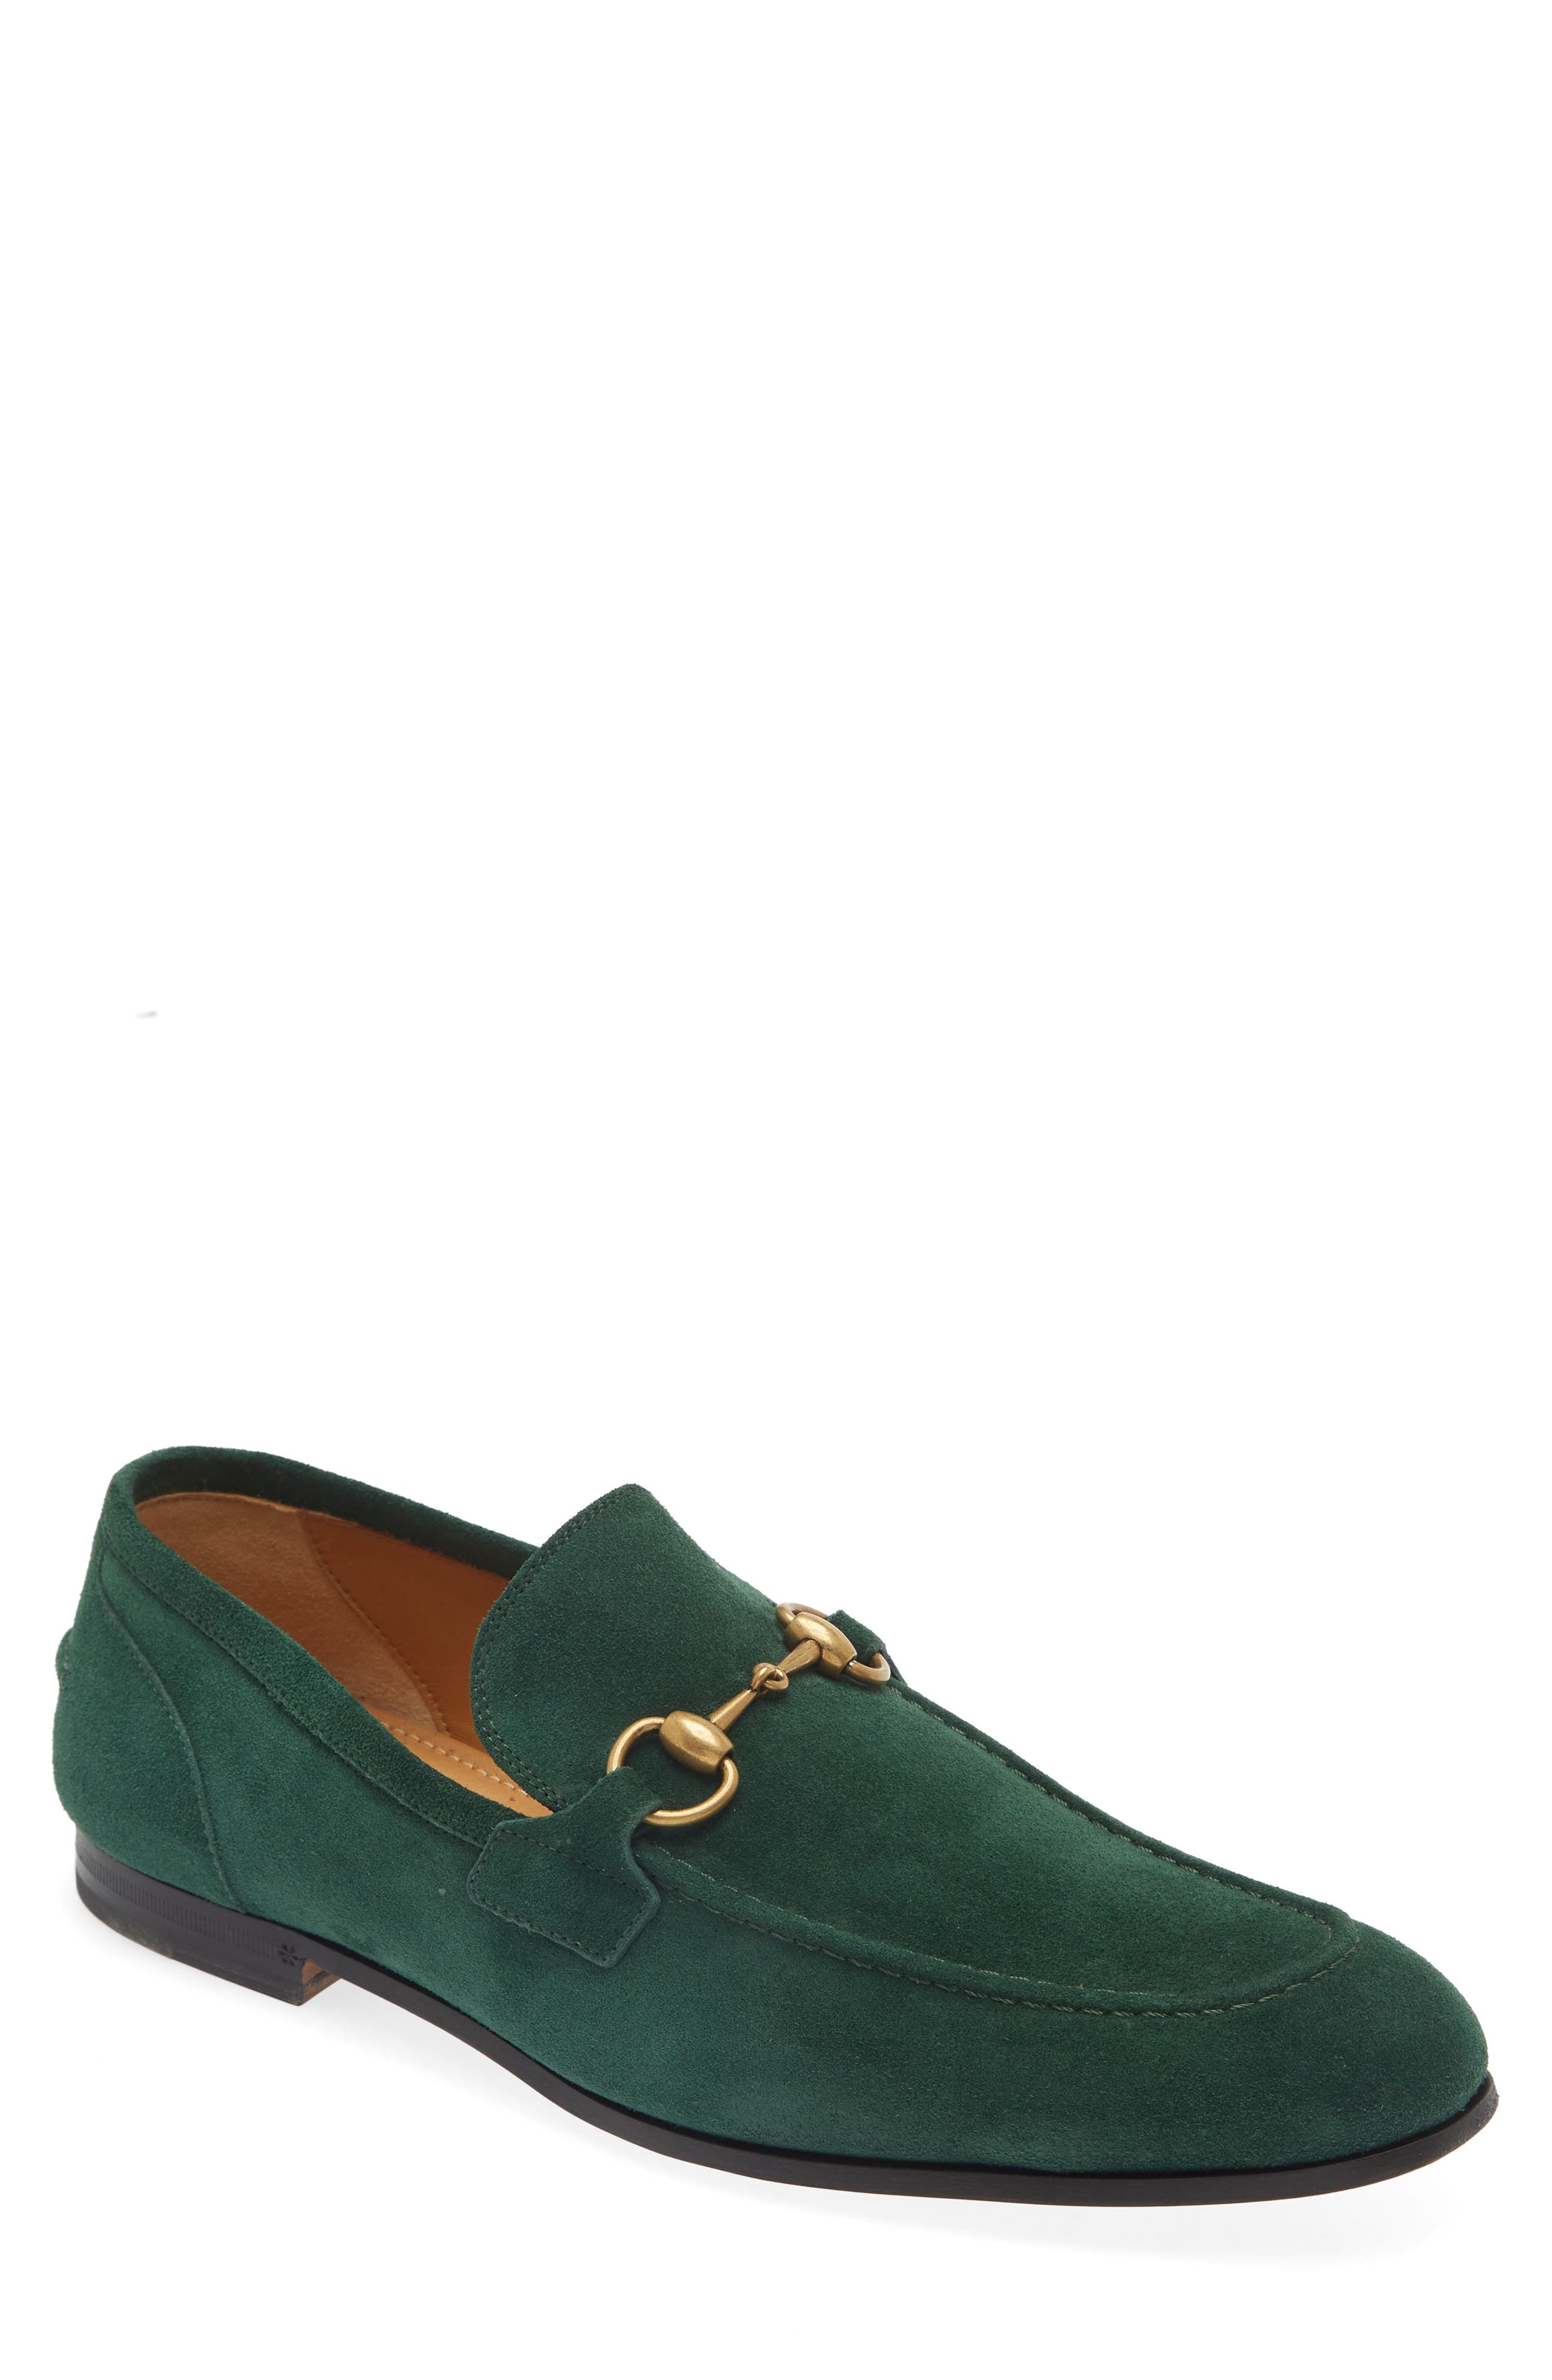 green dress shoes men